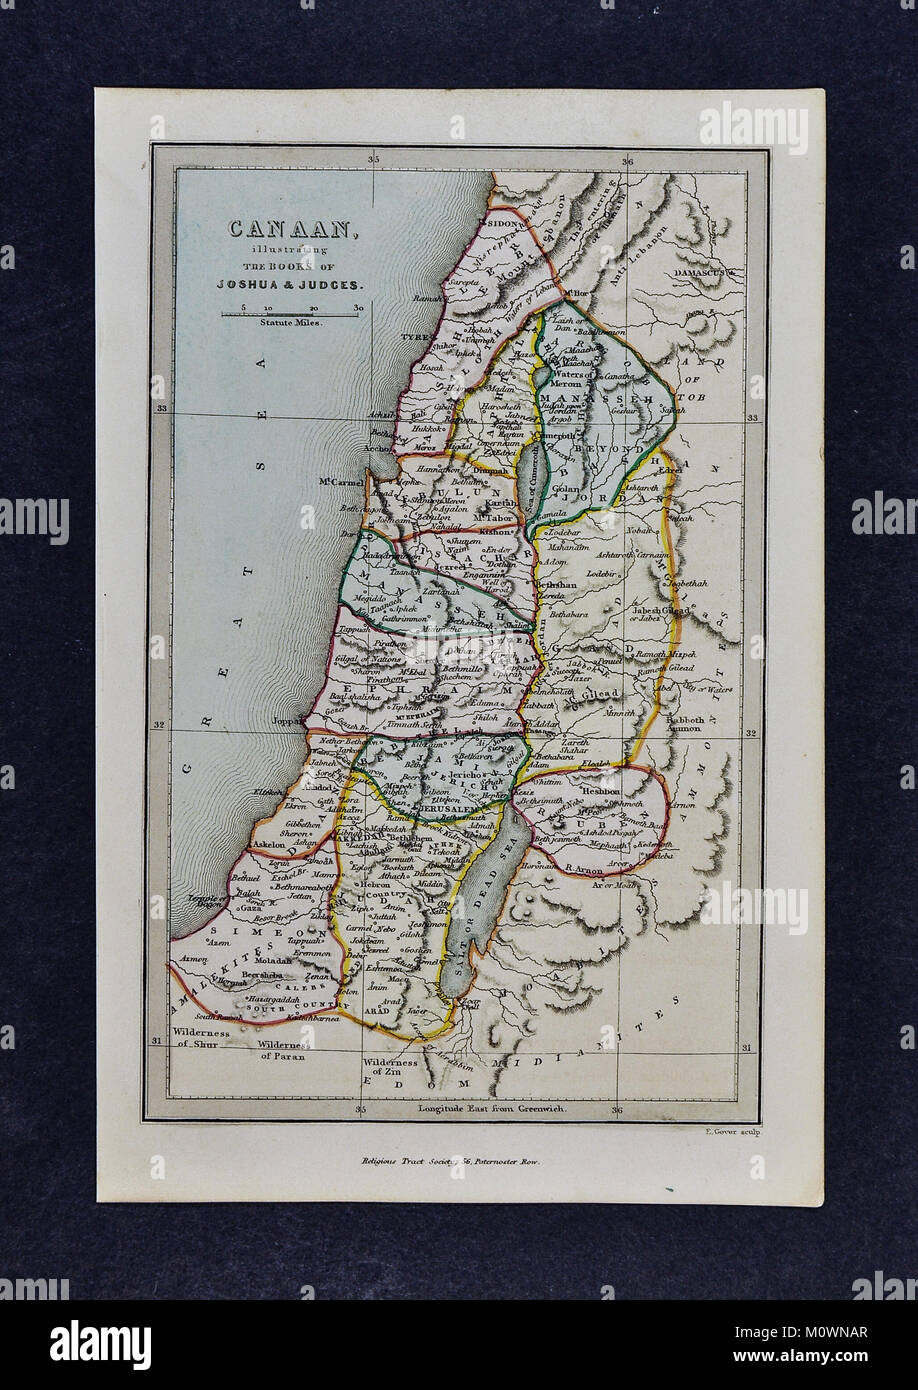 1799 Bible Tract Society Map - Canaan illustrating the Book of Joshua & Judges - Jerusalem Israel Old Testament Stock Photo